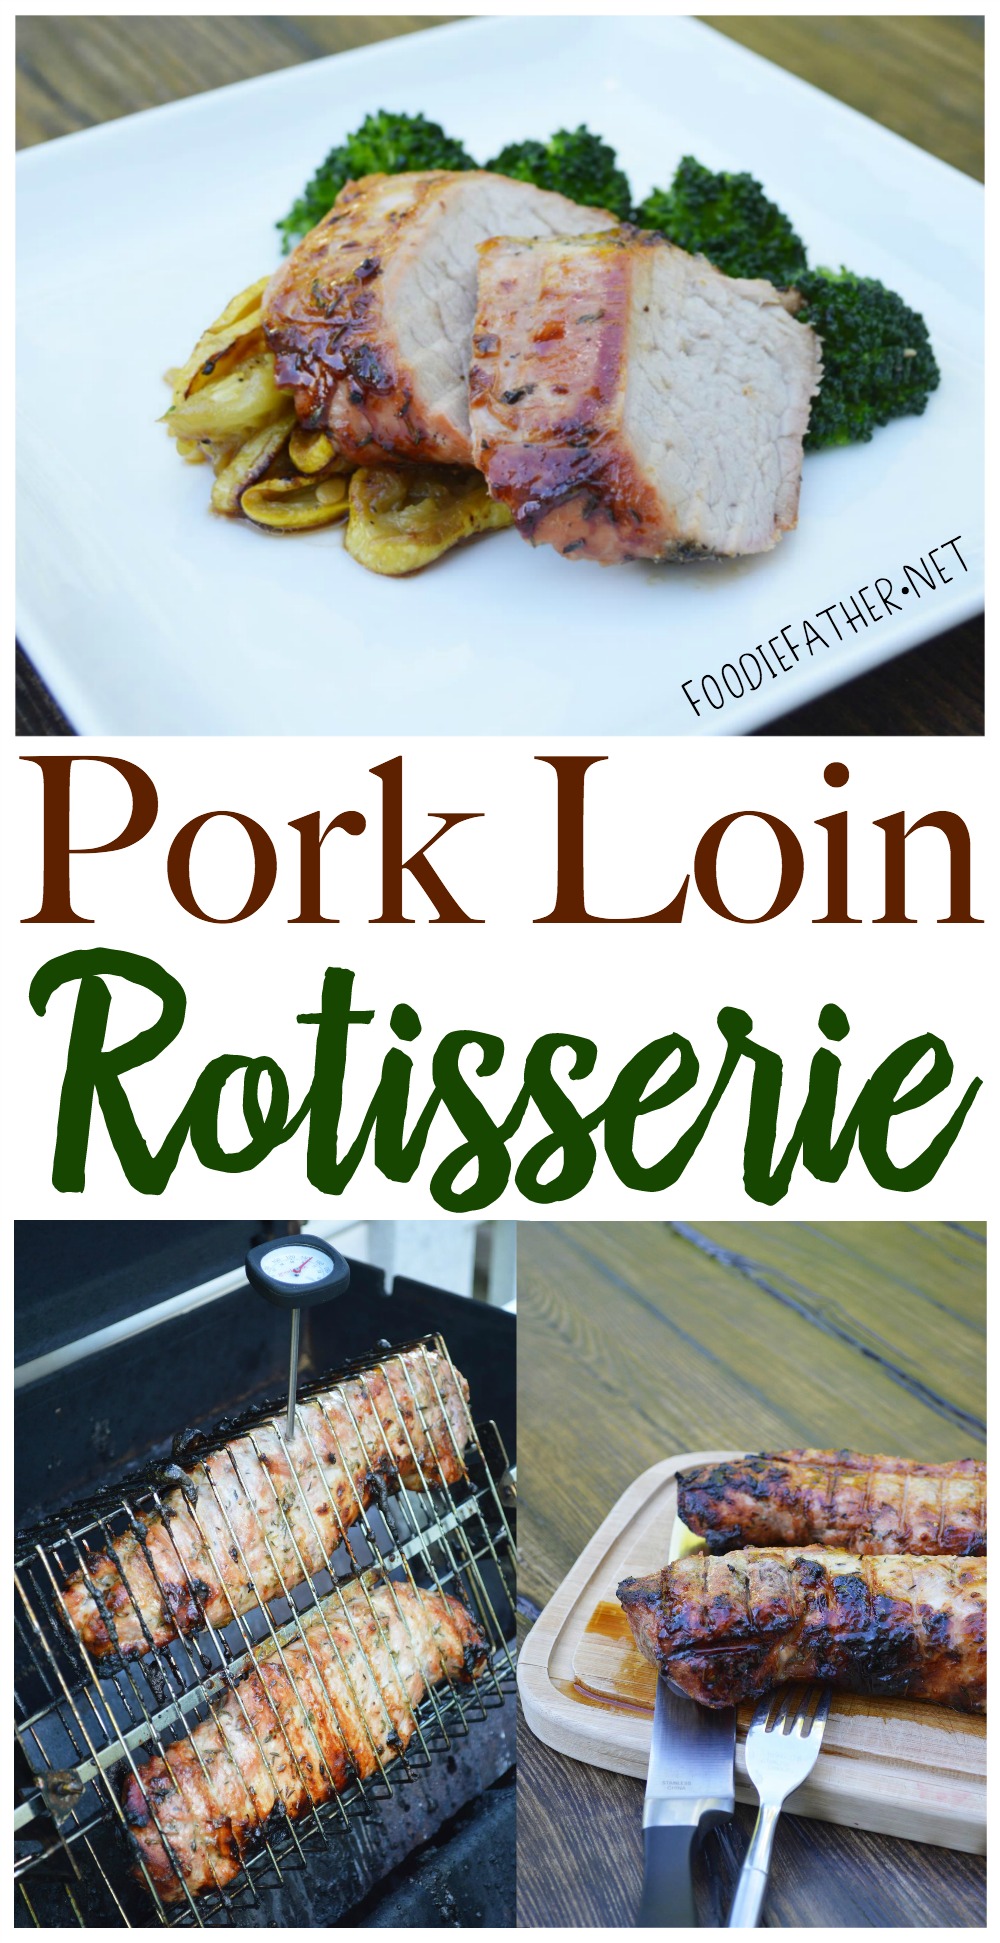 Pork loin rotisserie recipe